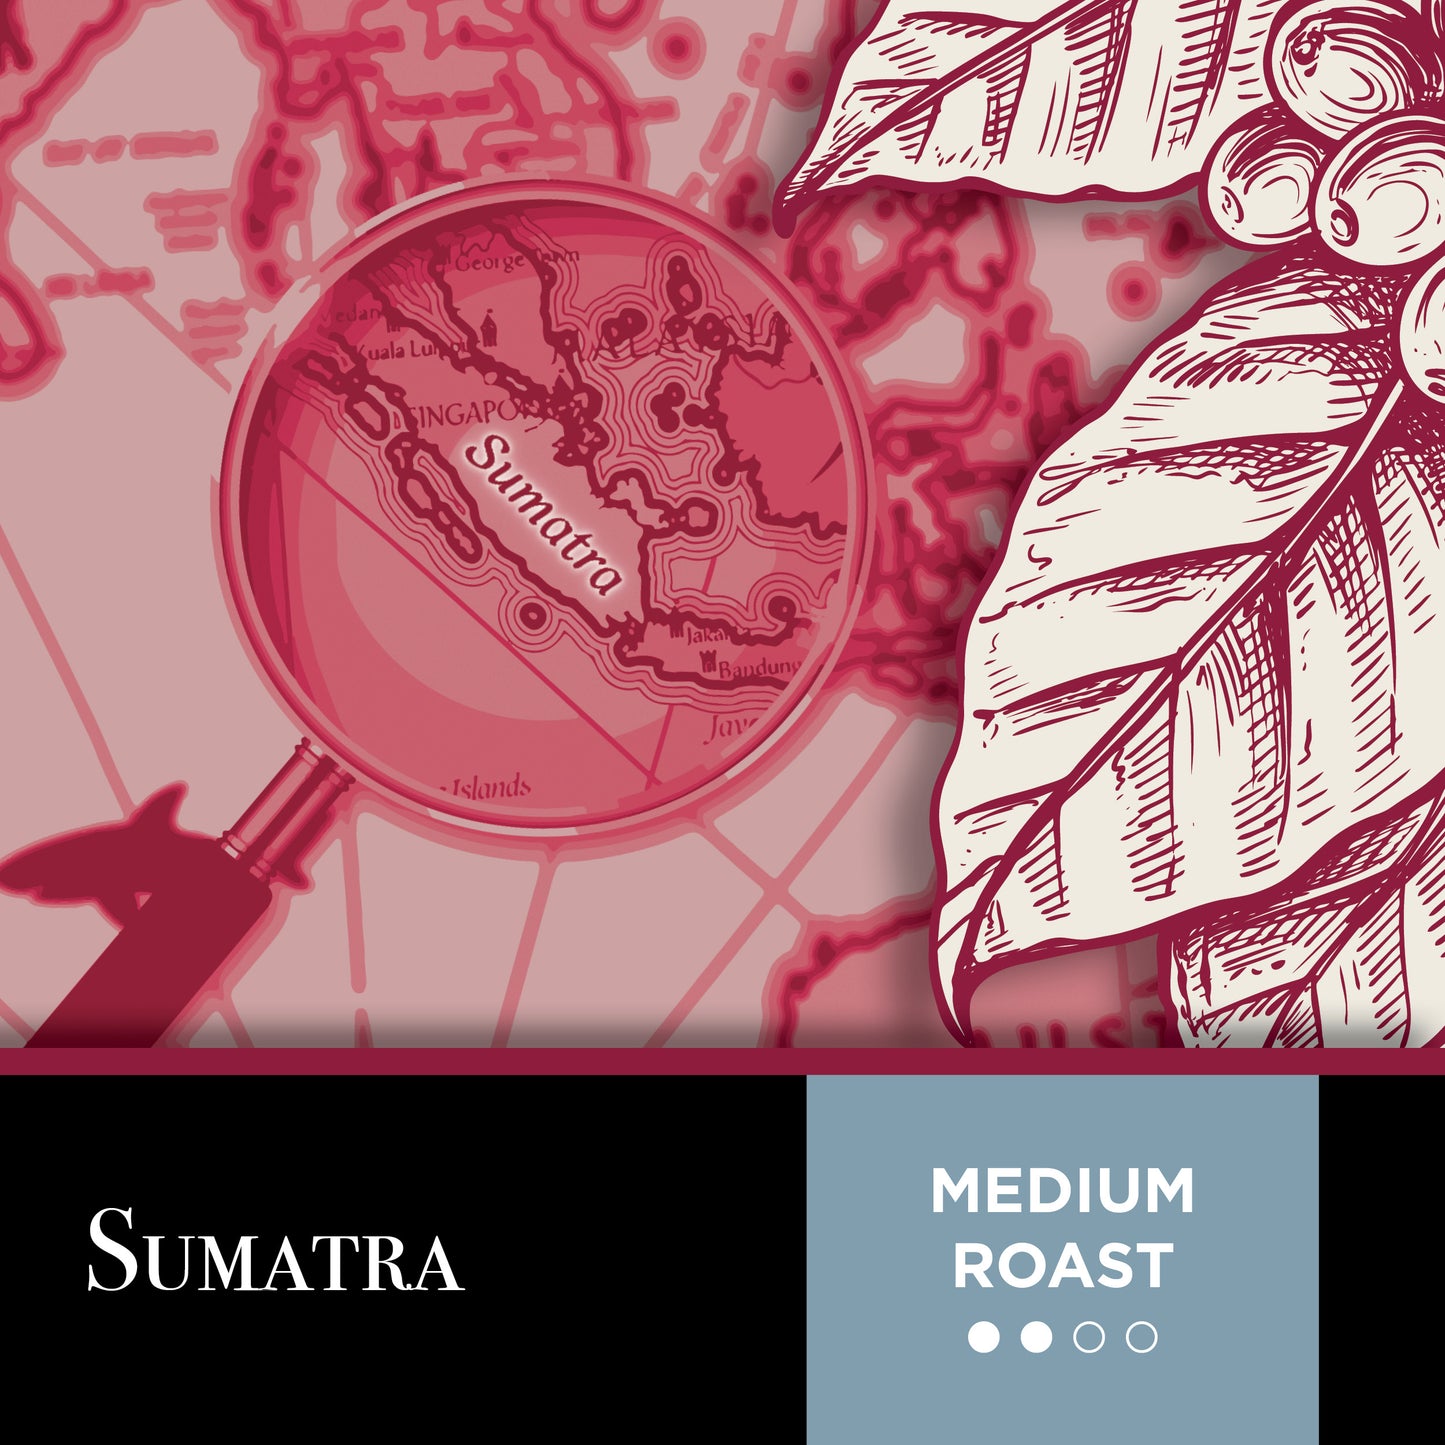 Sumatra Medium Roast